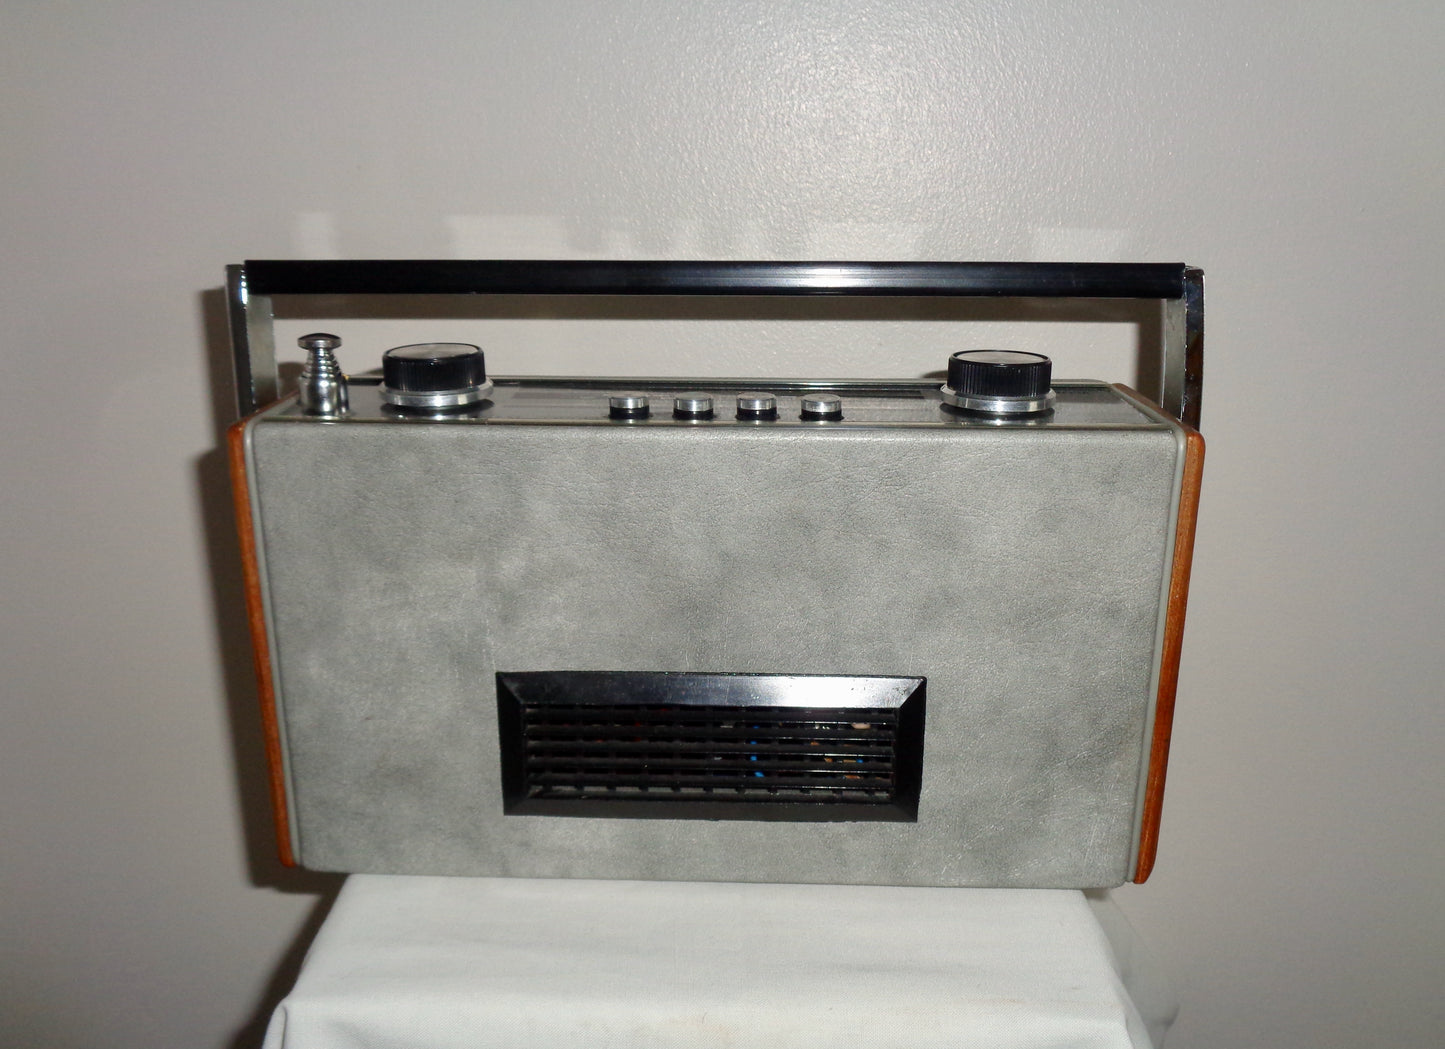 1980s Grey Vintage Roberts RFM3 Radio Portable Battery powered MW/LW/FM